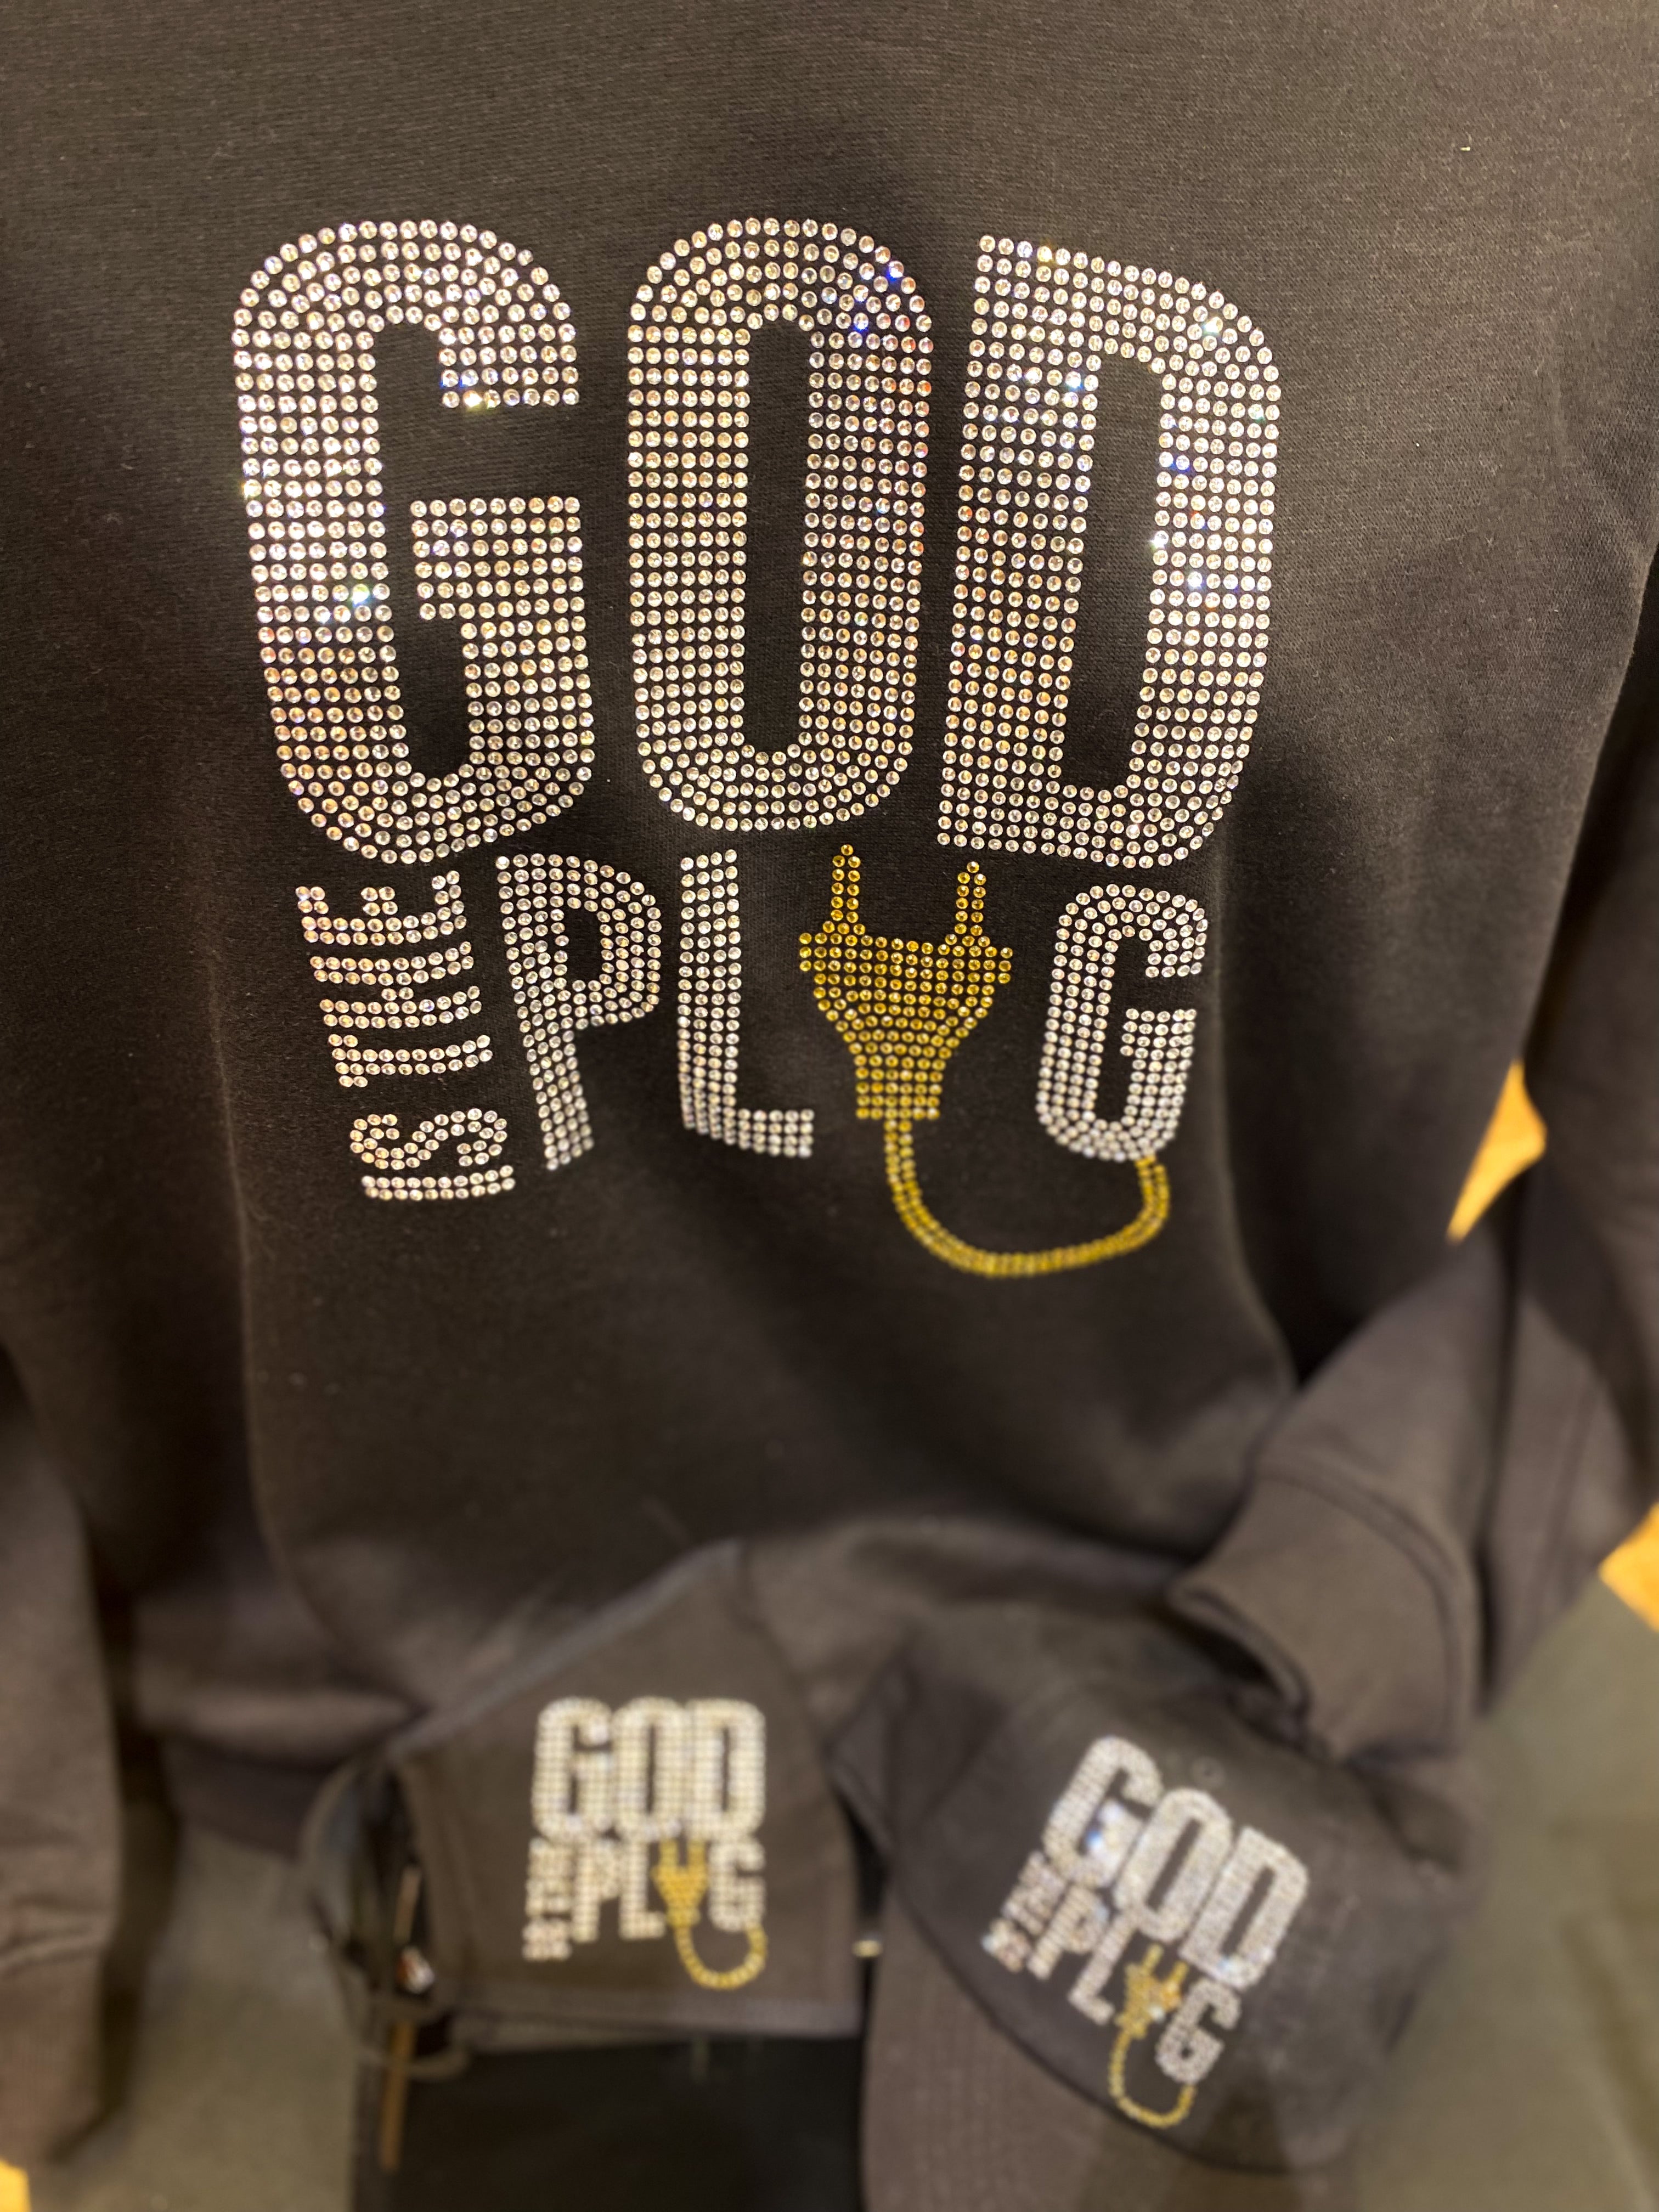 God is the PLUG!